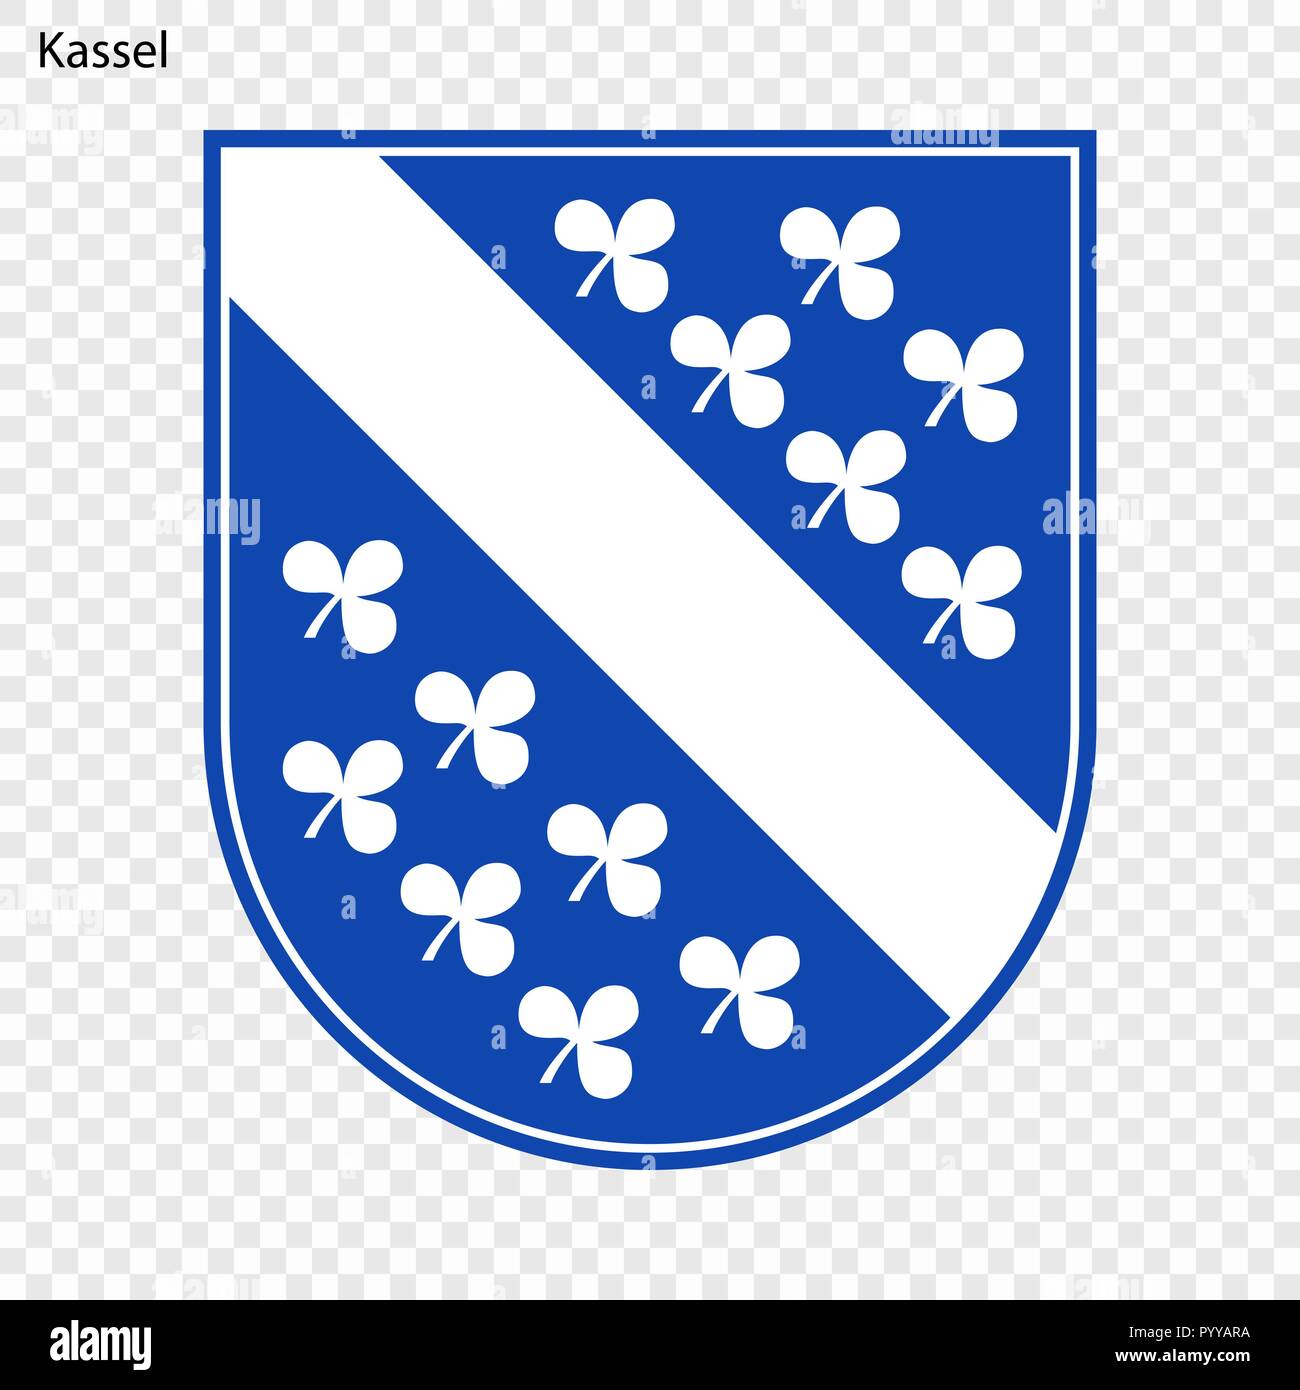 Emblem of Kassel. City of Germany. Vector illustration Stock Vector